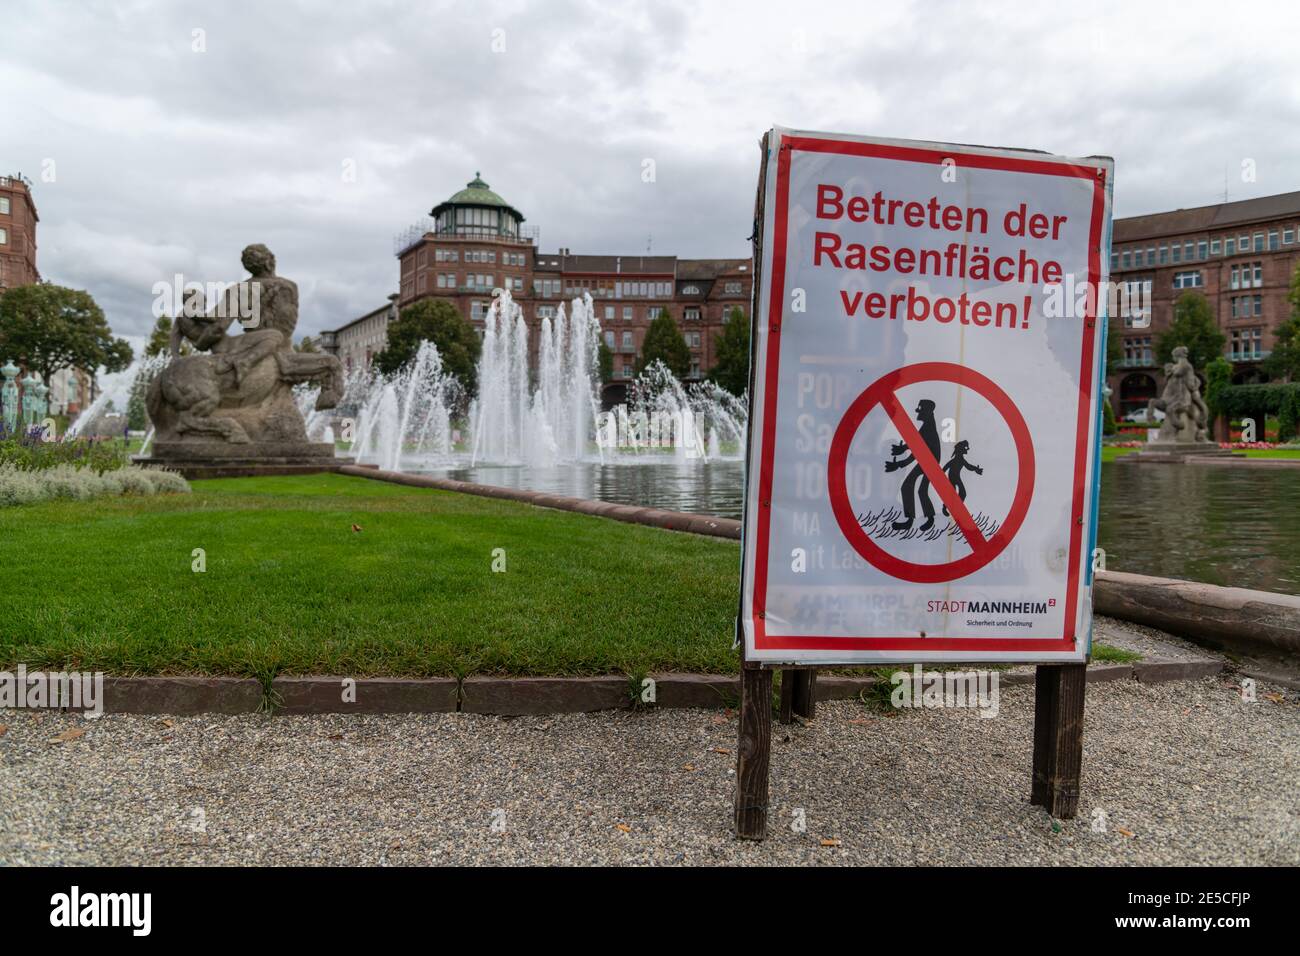 Mannheim, Bade-Wurtemberg / Allemagne, 09 25 2020: Panneau disant 'Betreten der Rasenfläche verboten' (intrusion sur l'herbe interdite) avec un FO Banque D'Images